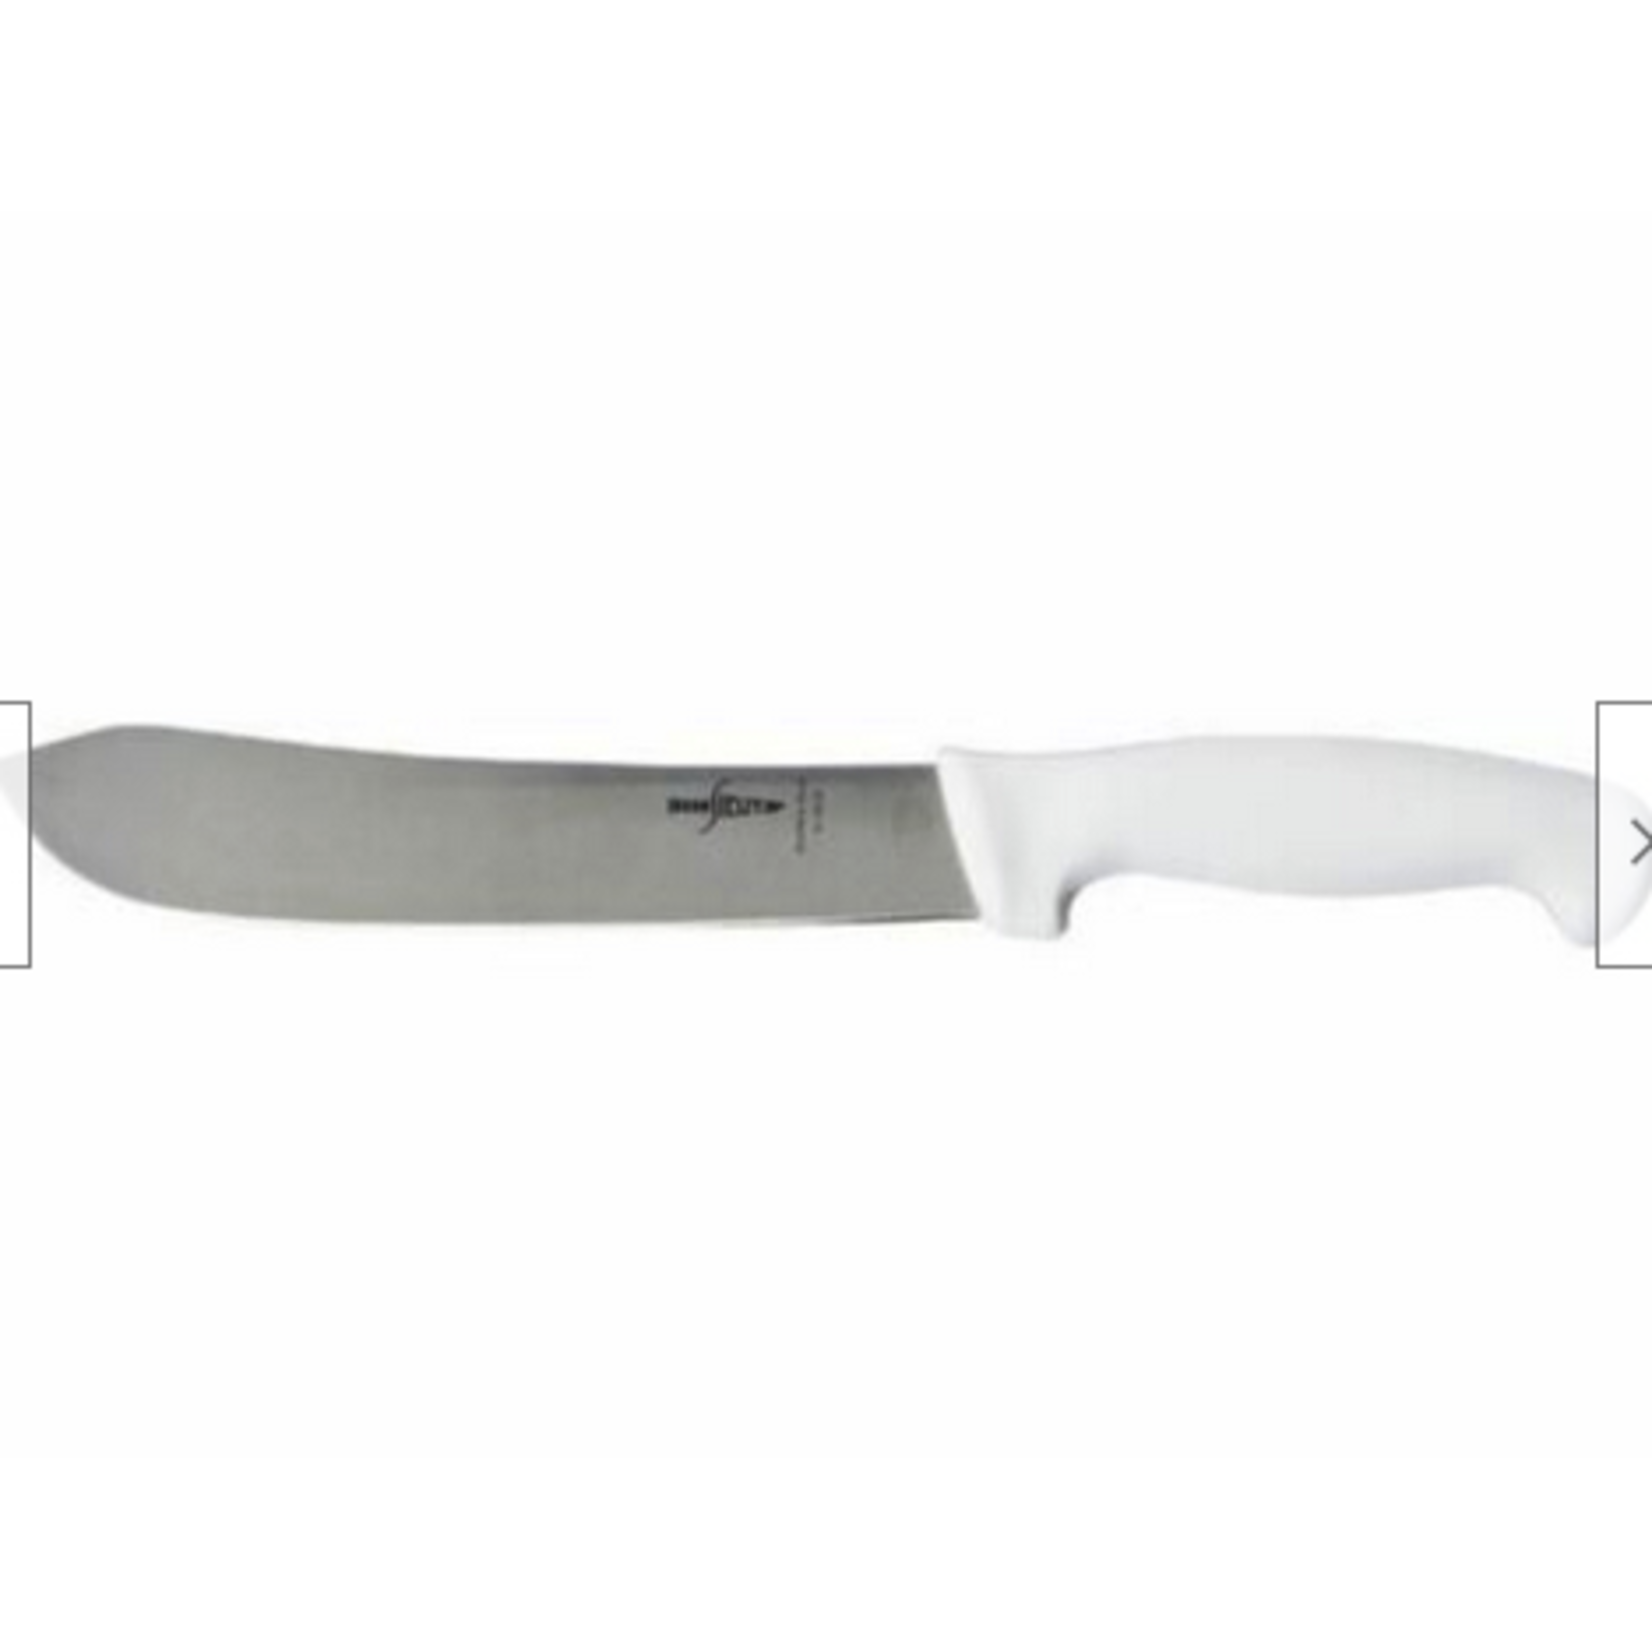 Sicut Sicut 4 Knife + Steel All purpose Butchering Package Glow handles in Canvas Roll